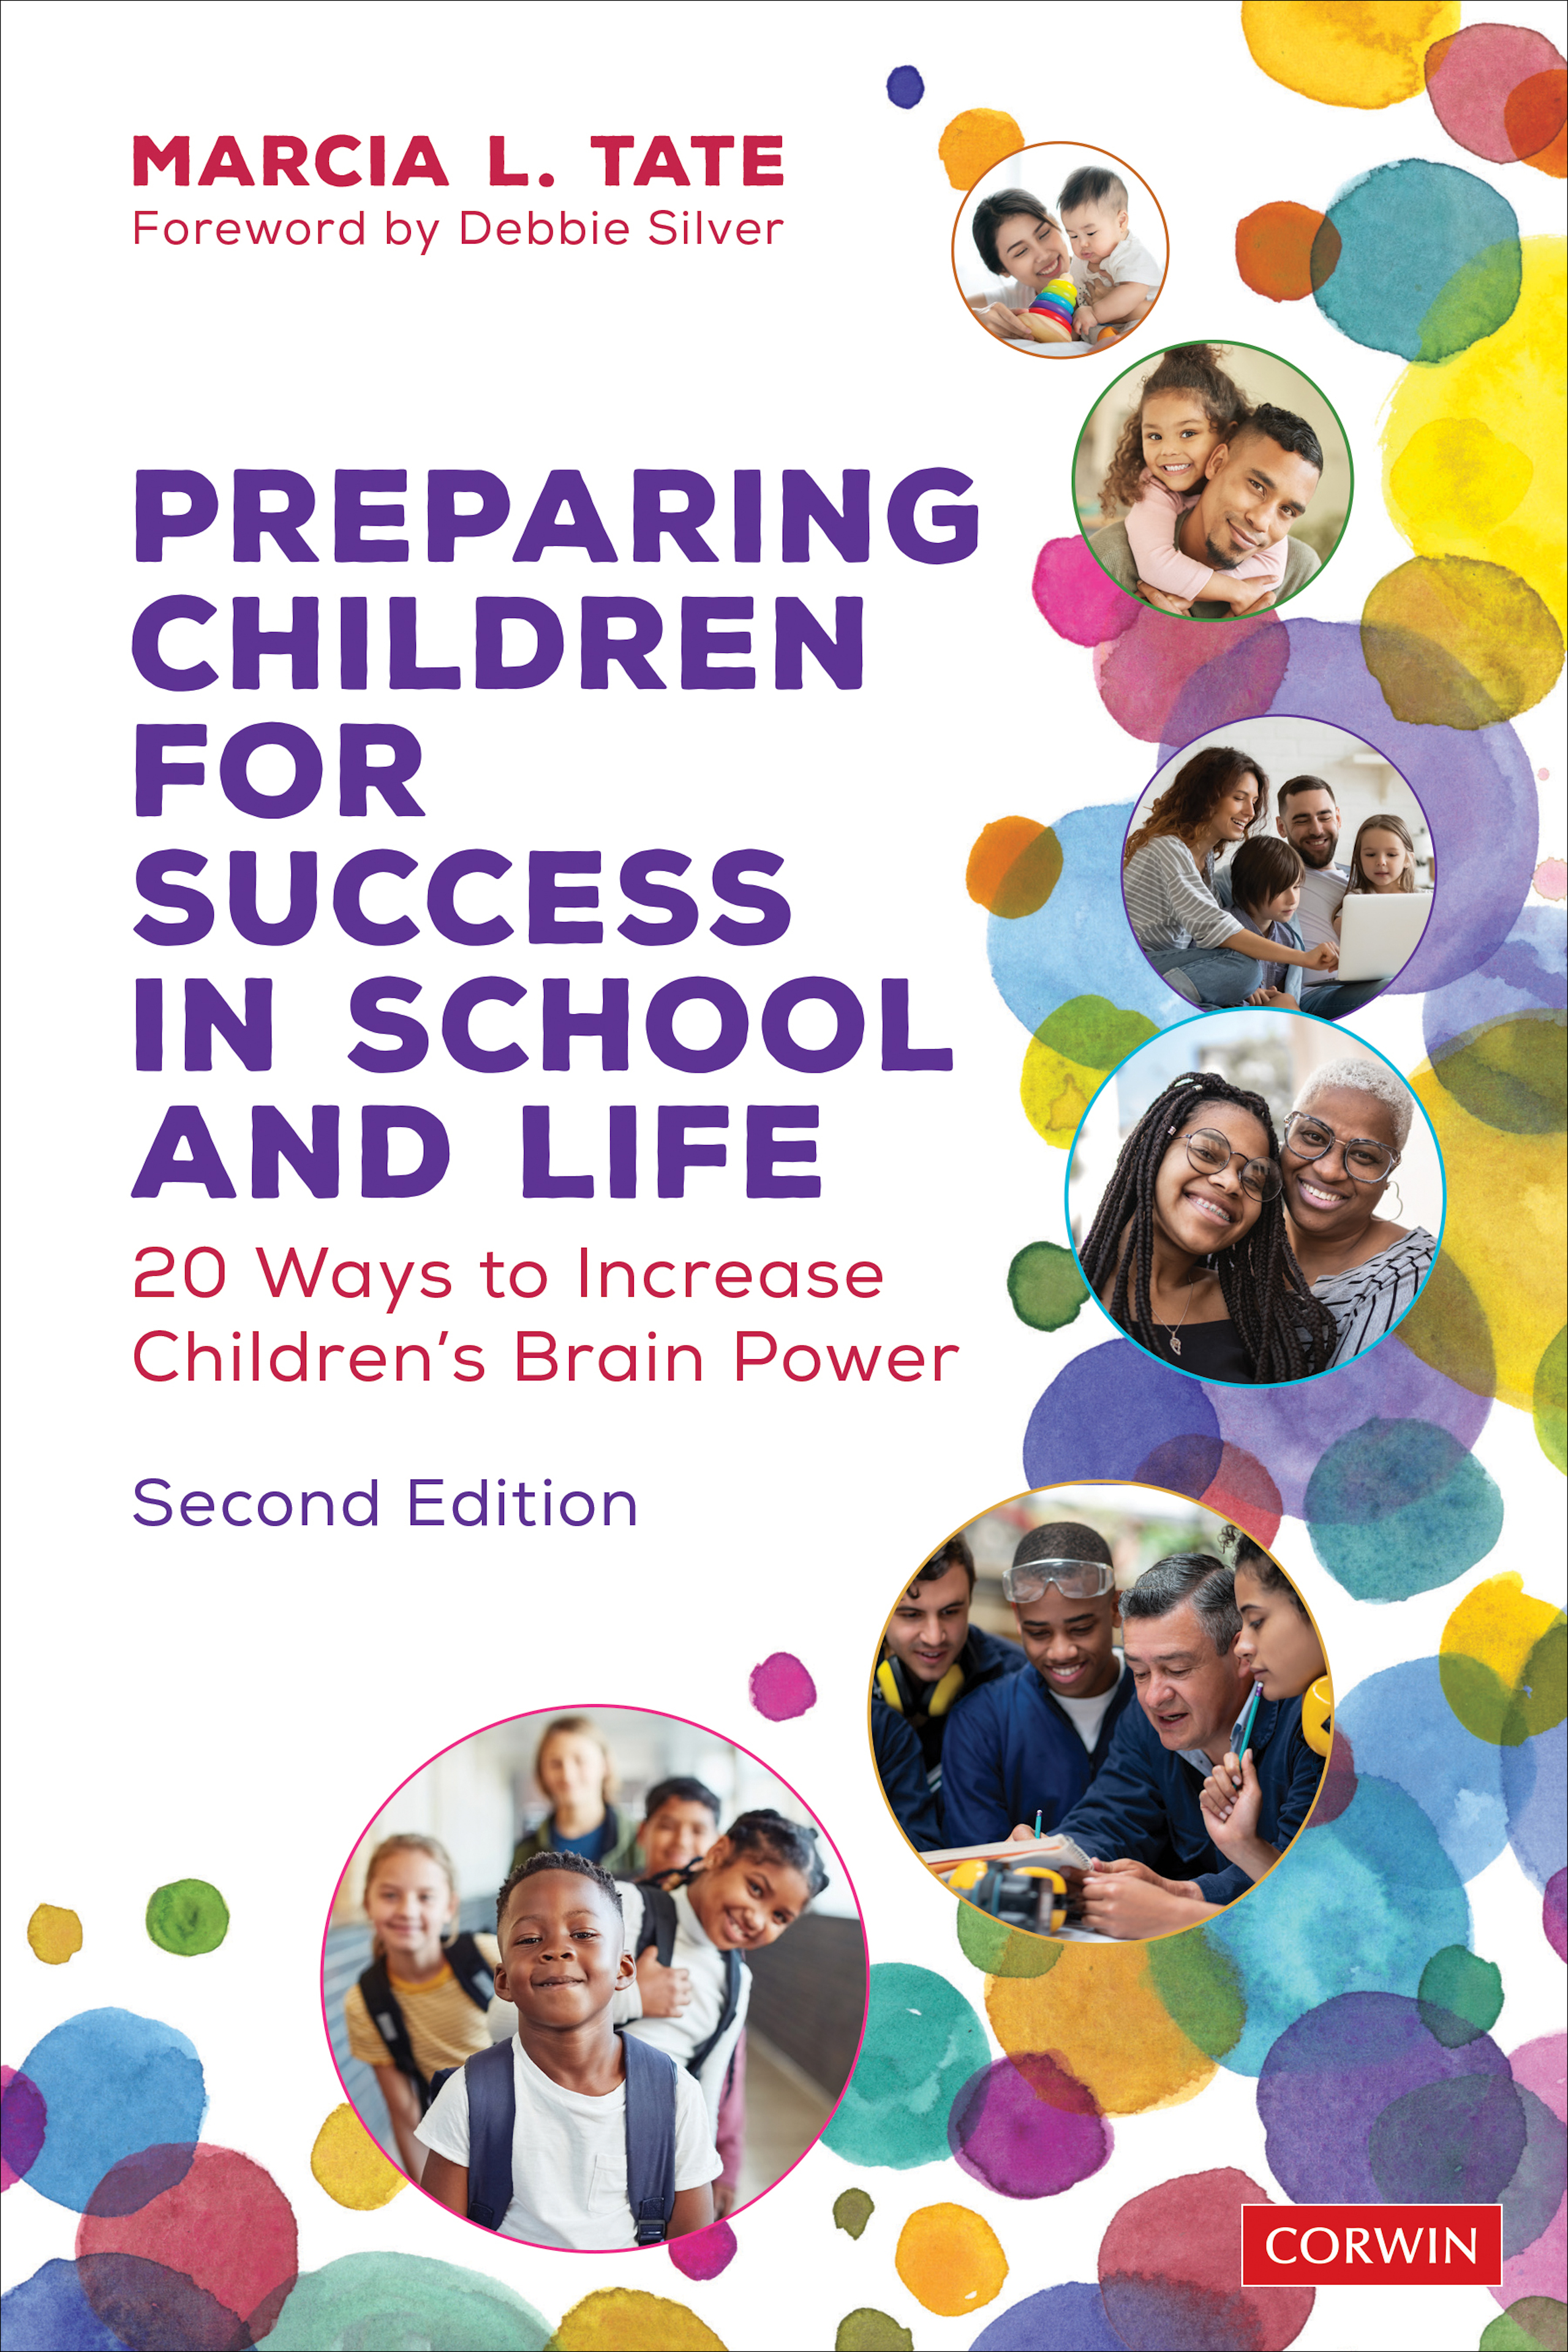 Preparing Children for Success in School and Life